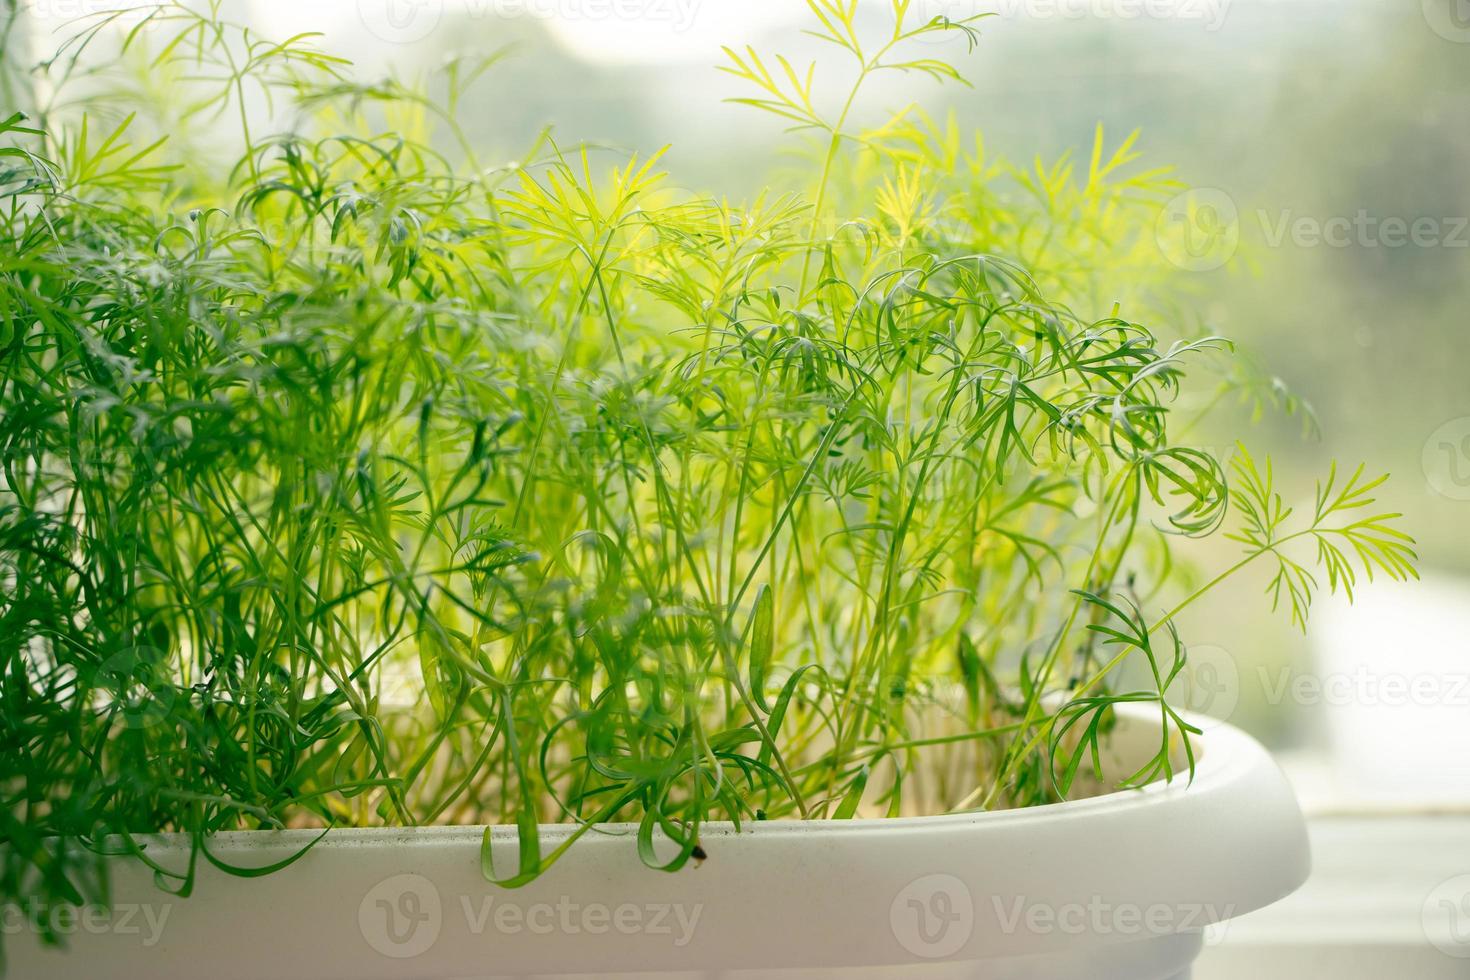 groene jonge dille close-up. thuis op het raam pittige microgreens kweken. foto